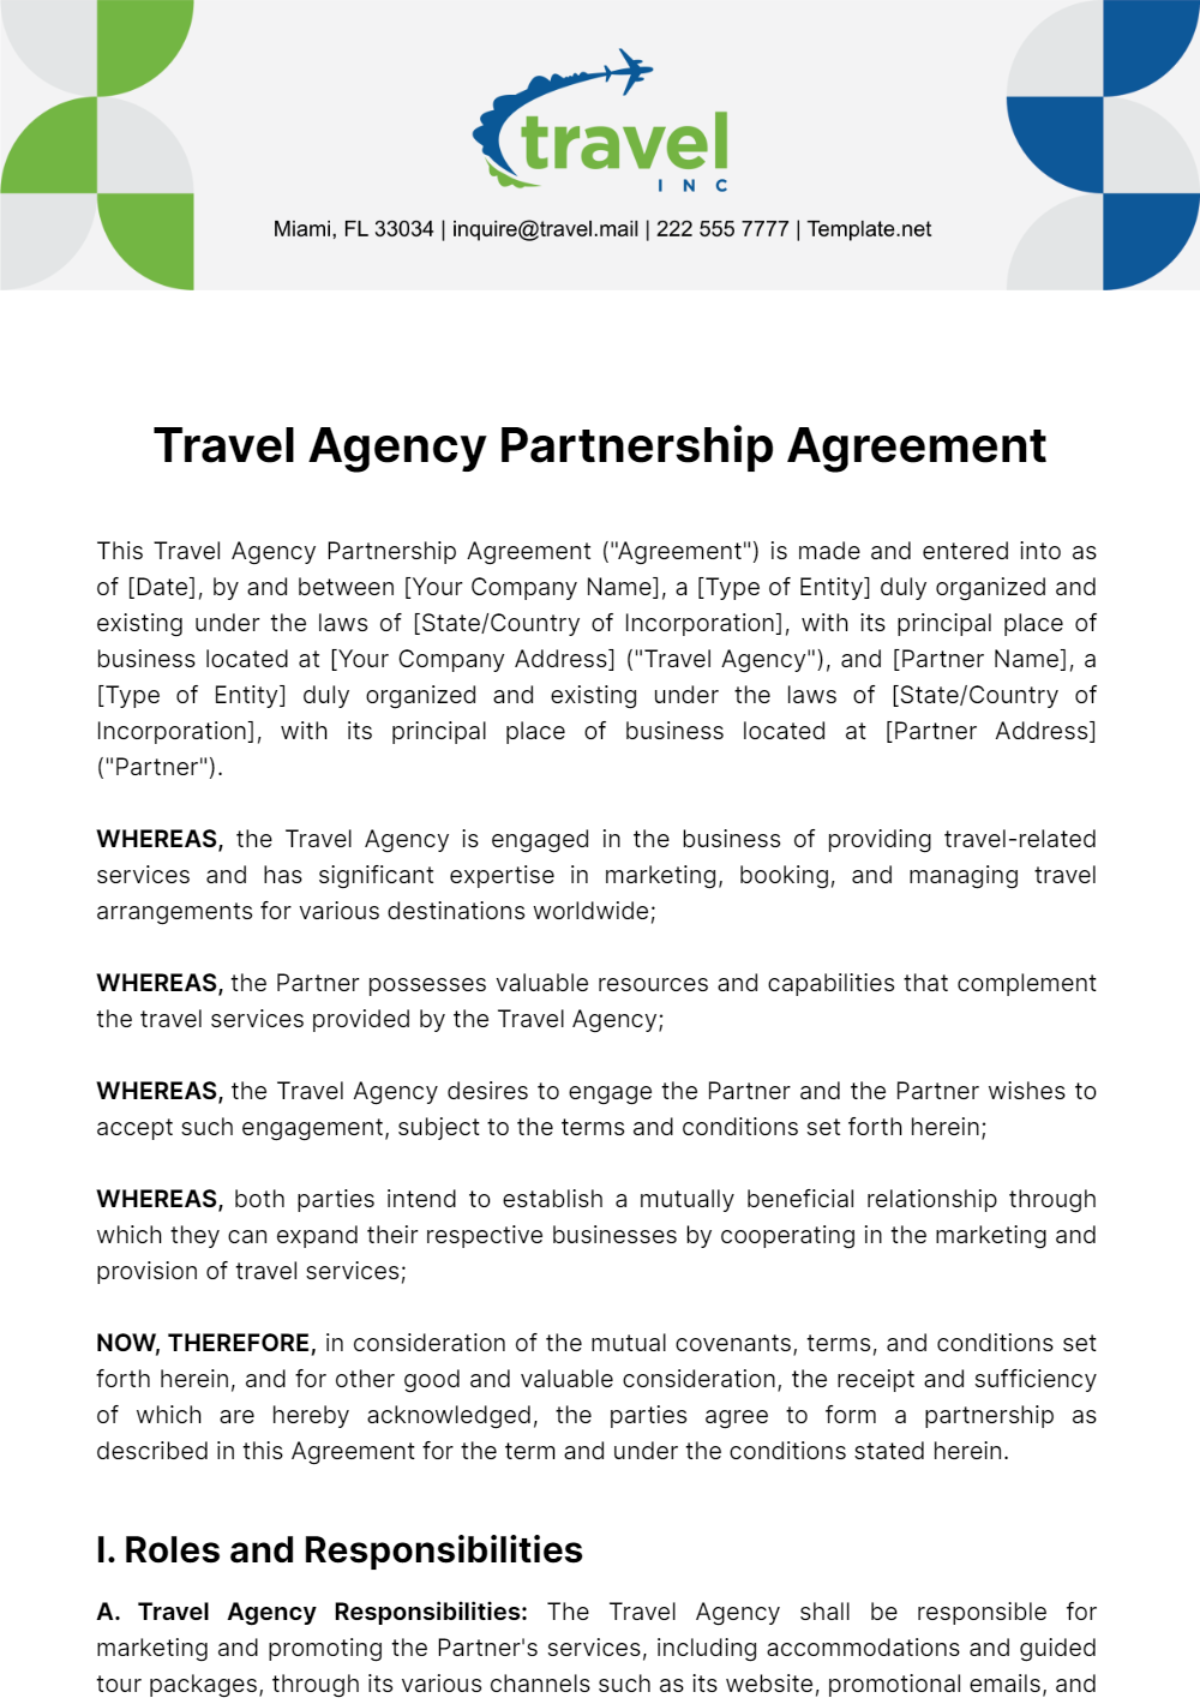 Travel Agency Partnership Agreement Template